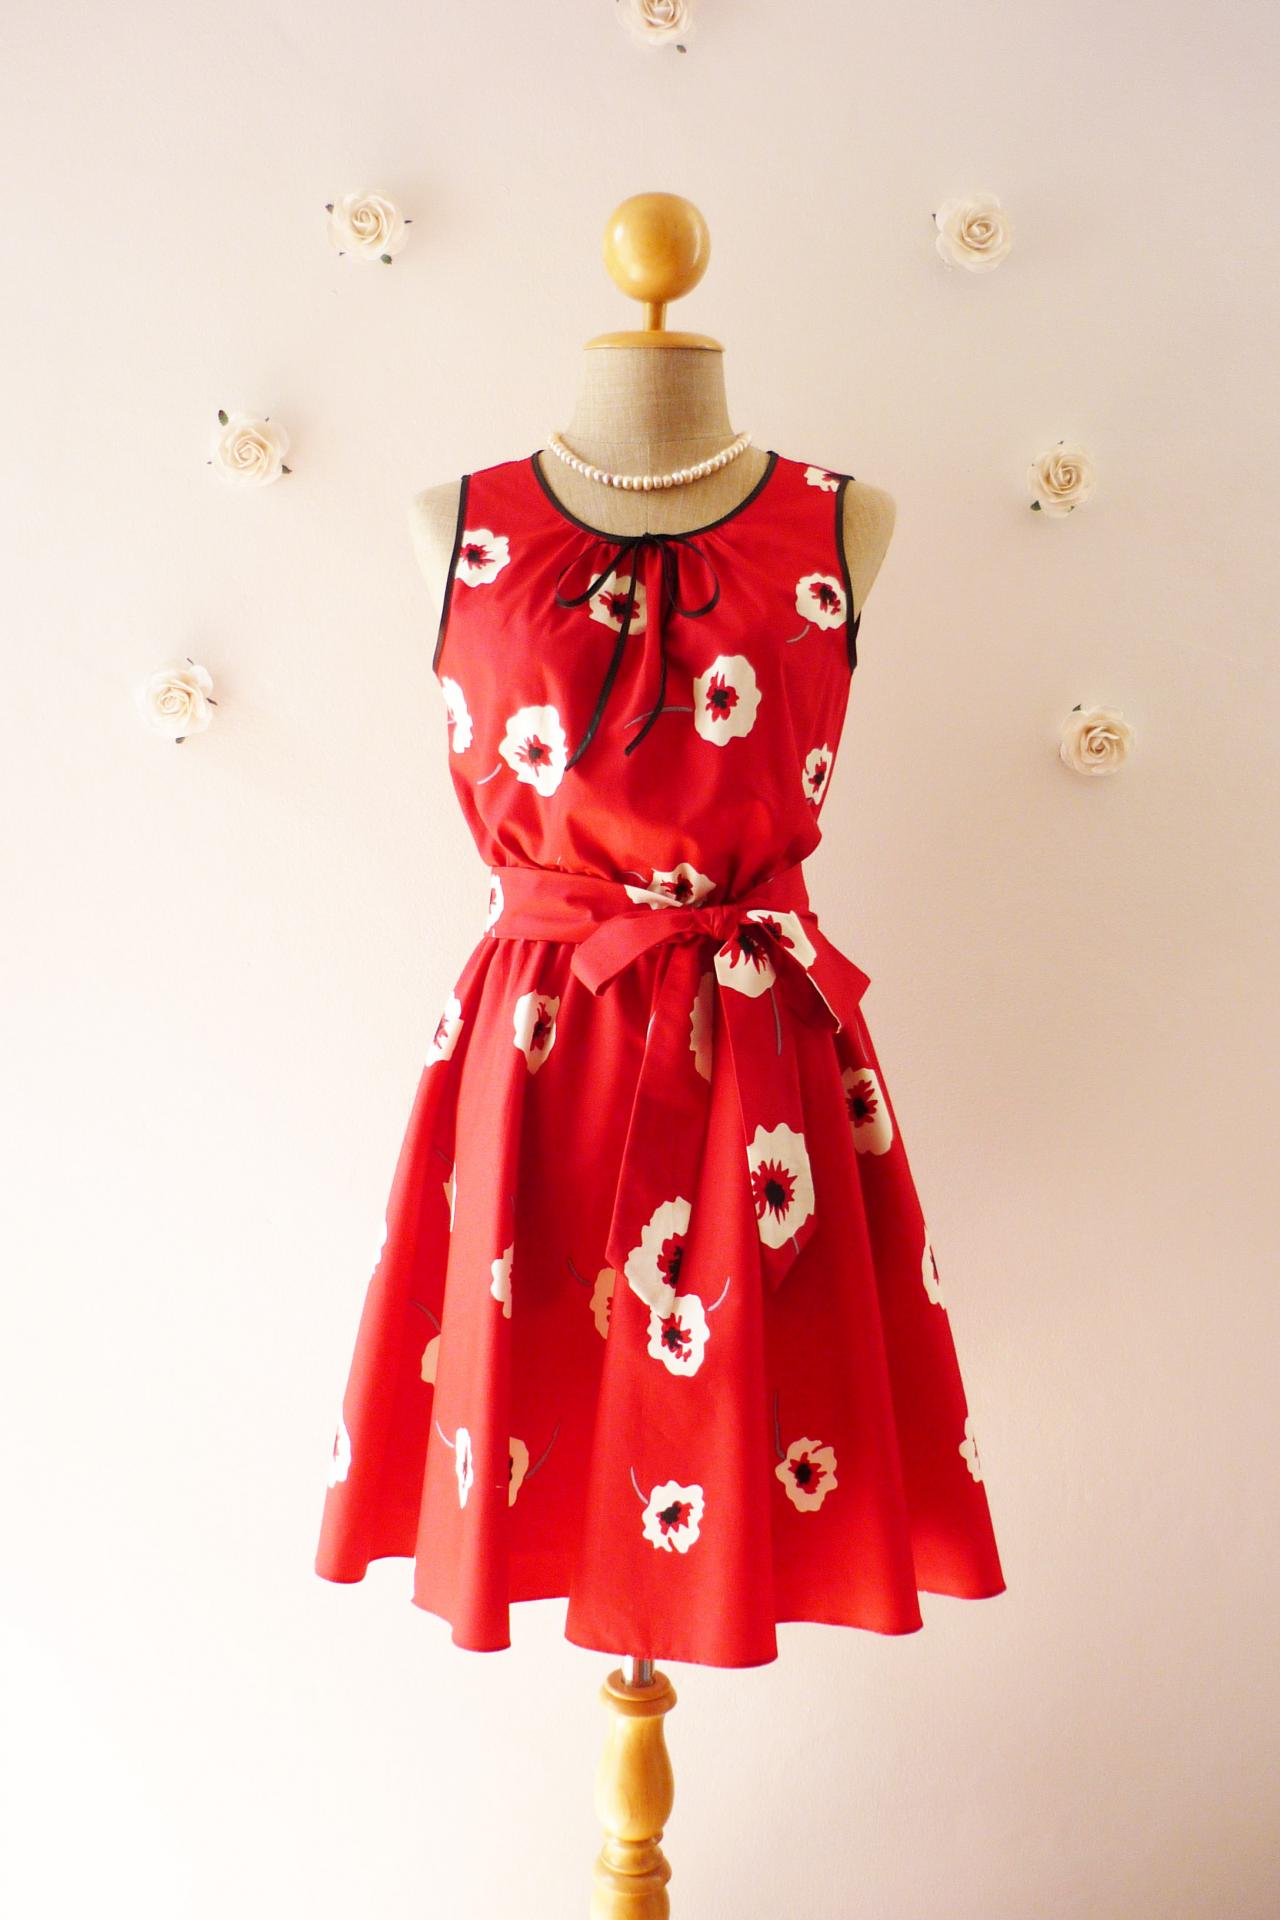 Red Floral Dress Tea Dress Vintage Inspired Dress Sleeveless Dress Bridesmaid Party Dress Christmas Dress -size Xs,s,m,l,xl